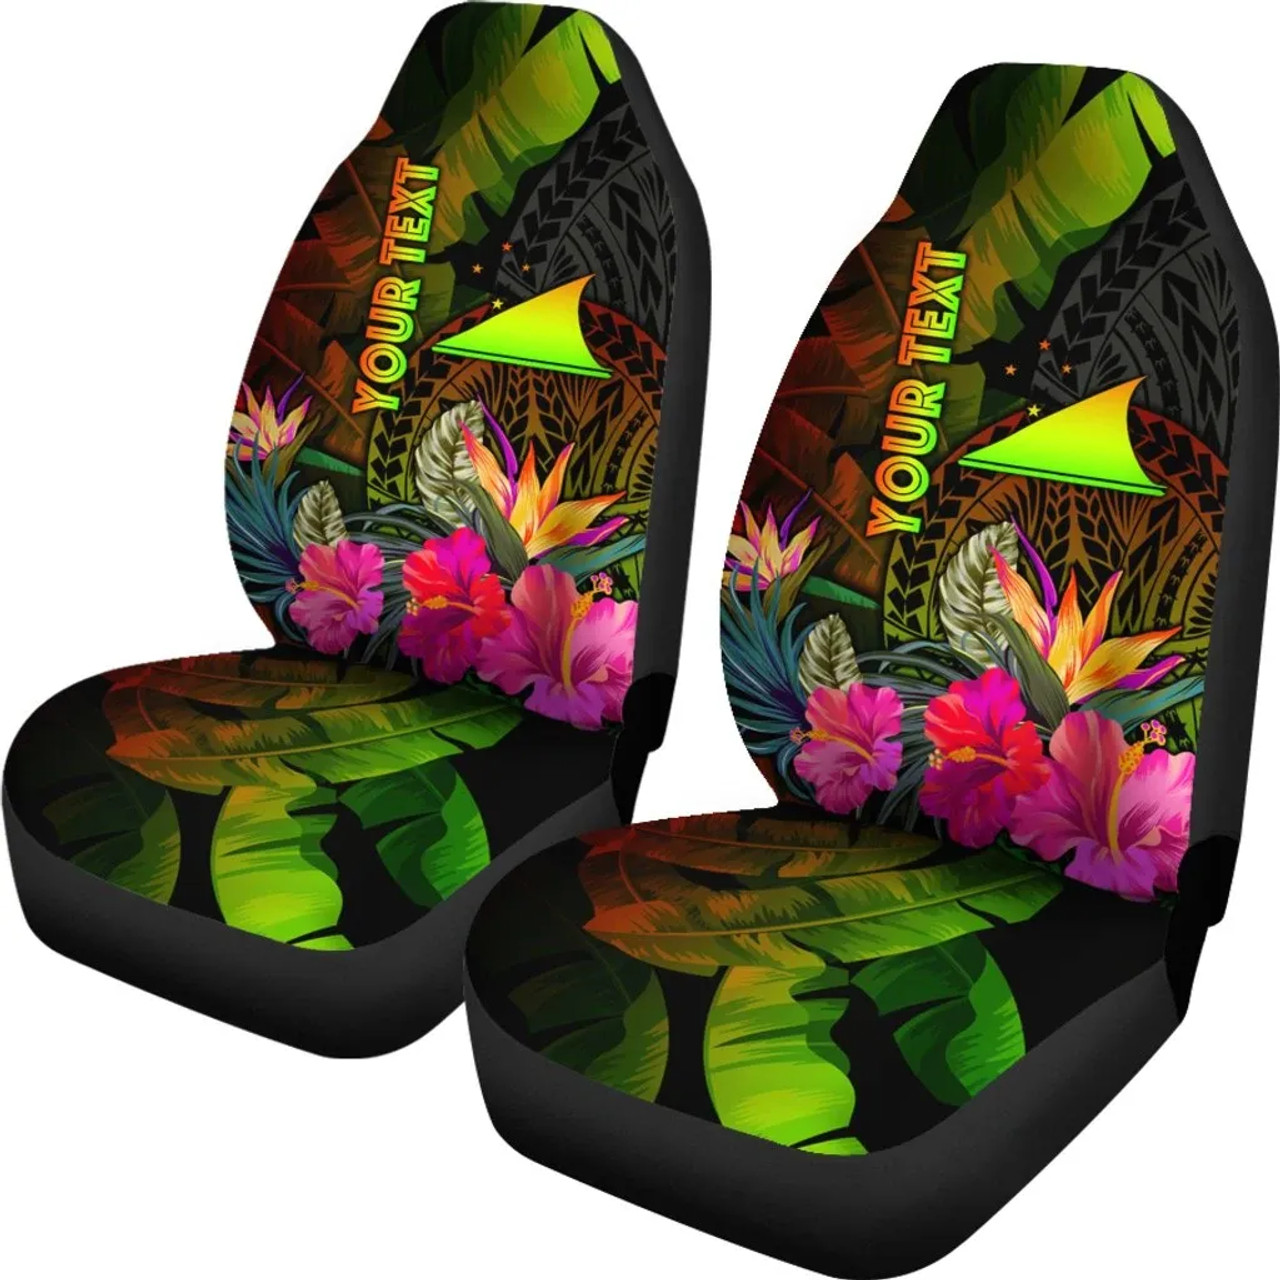 Tokelau Polynesian Personalised Car Seat Covers - Hibiscus and Banana Leaves